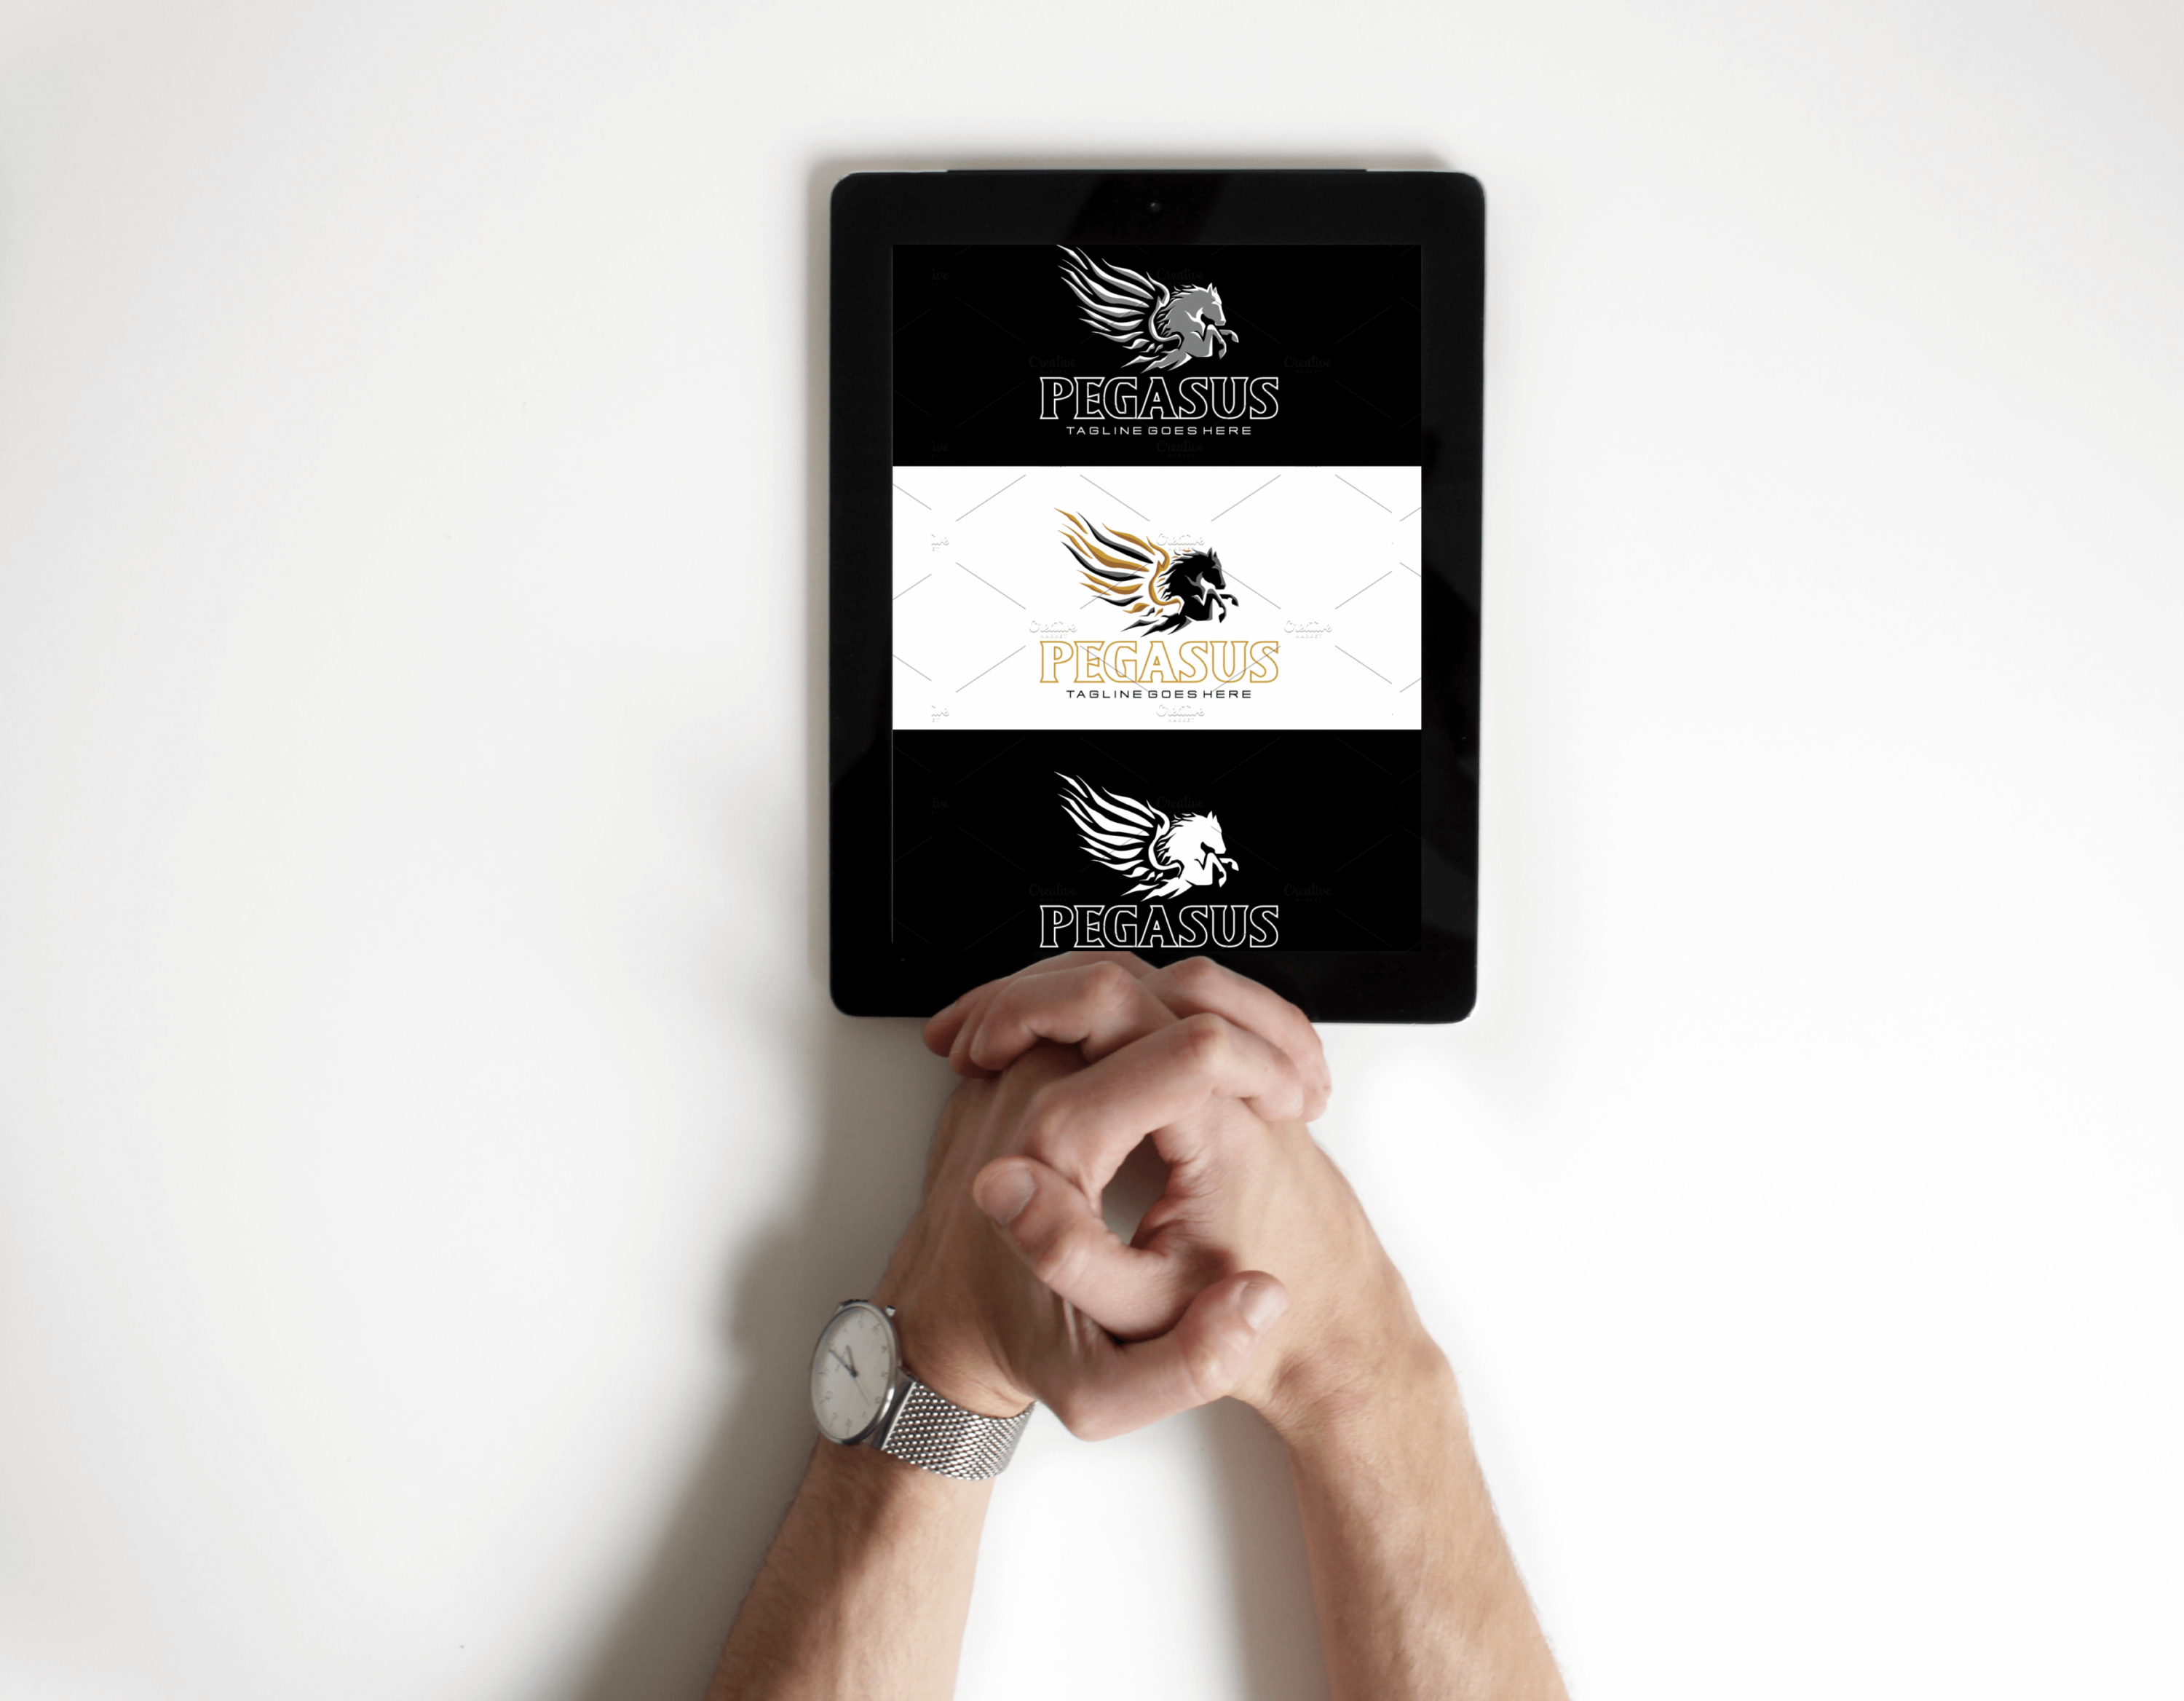 Pegasus concept design on tablet.